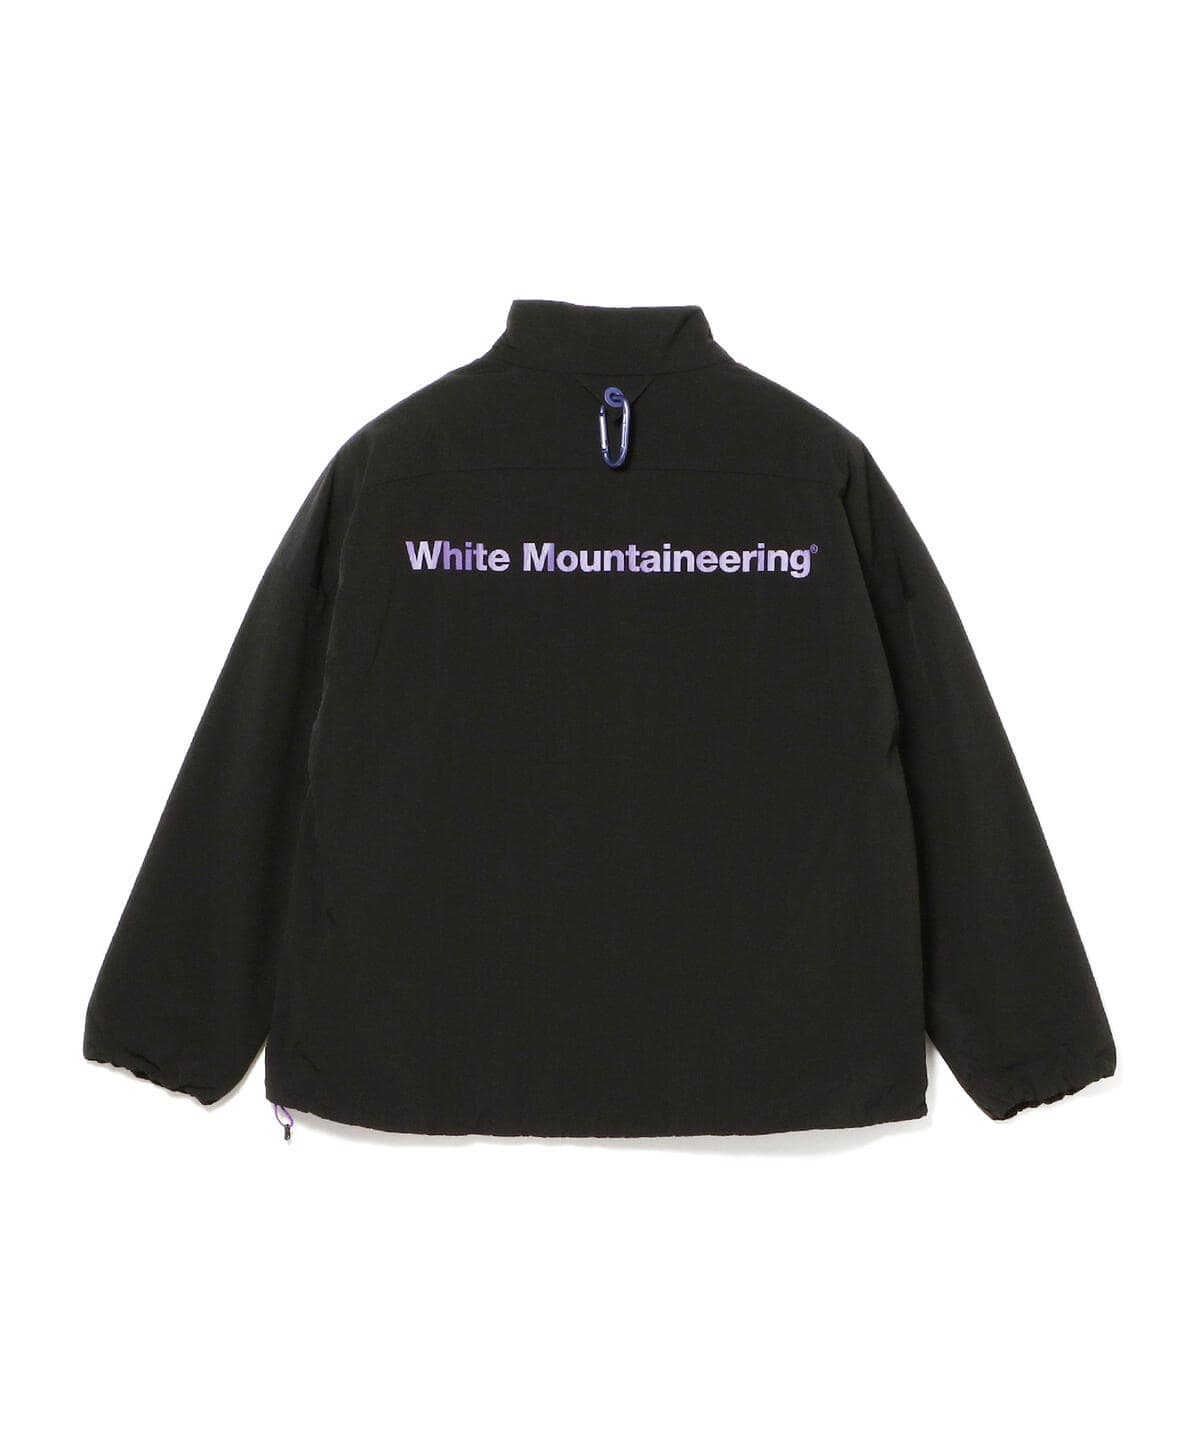 White Mountaineering 定価64000円 BEAMS